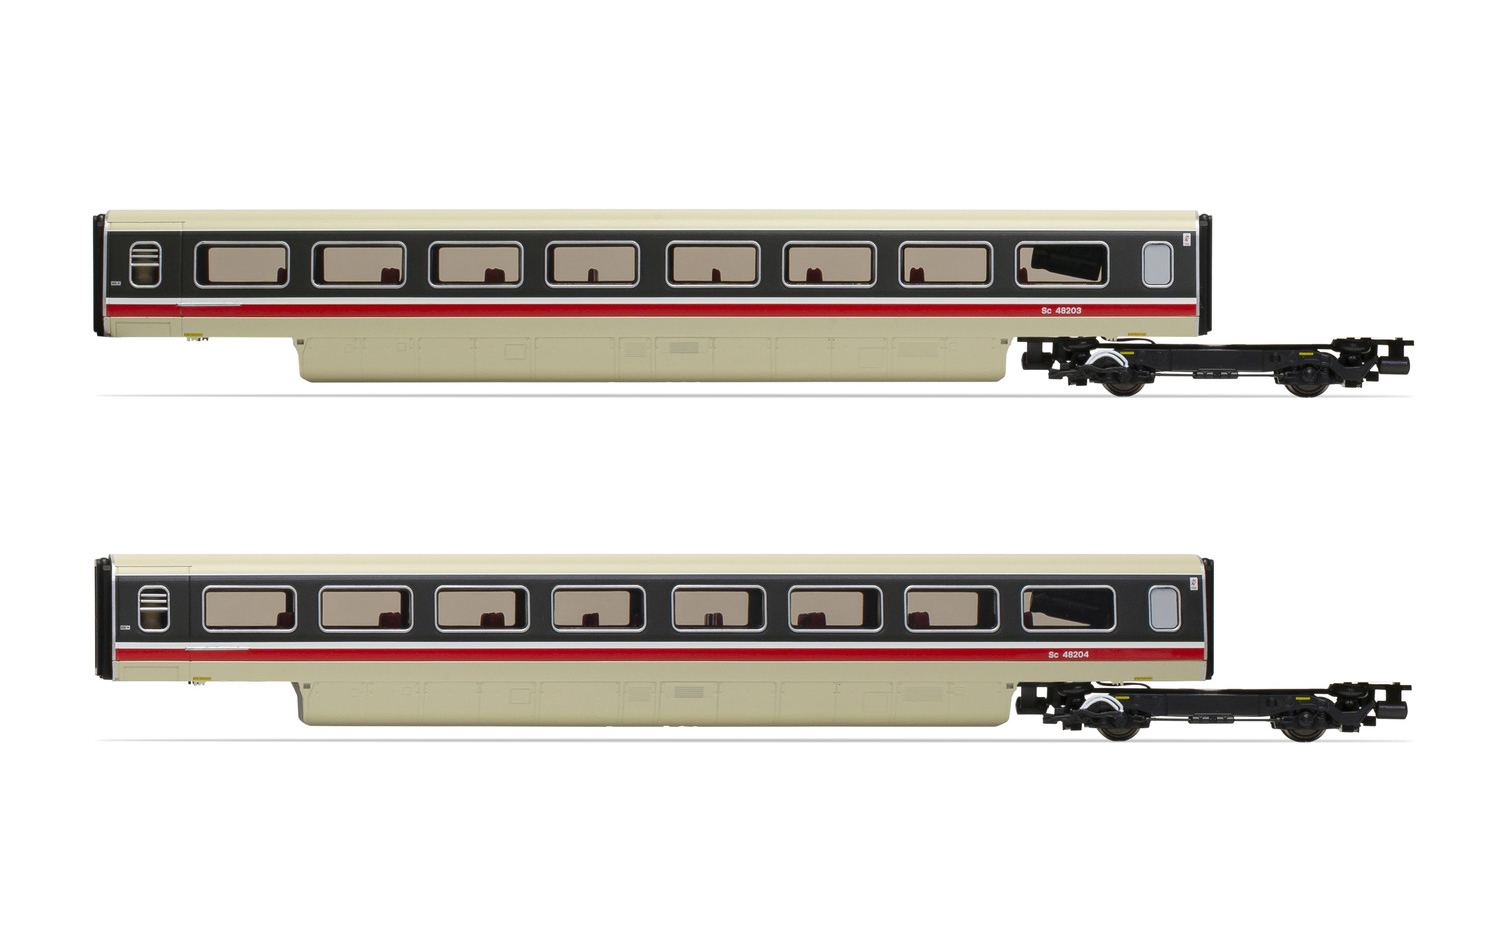 R40011 Hornby BR, Class 370 Advanced Passenger Train 2-car